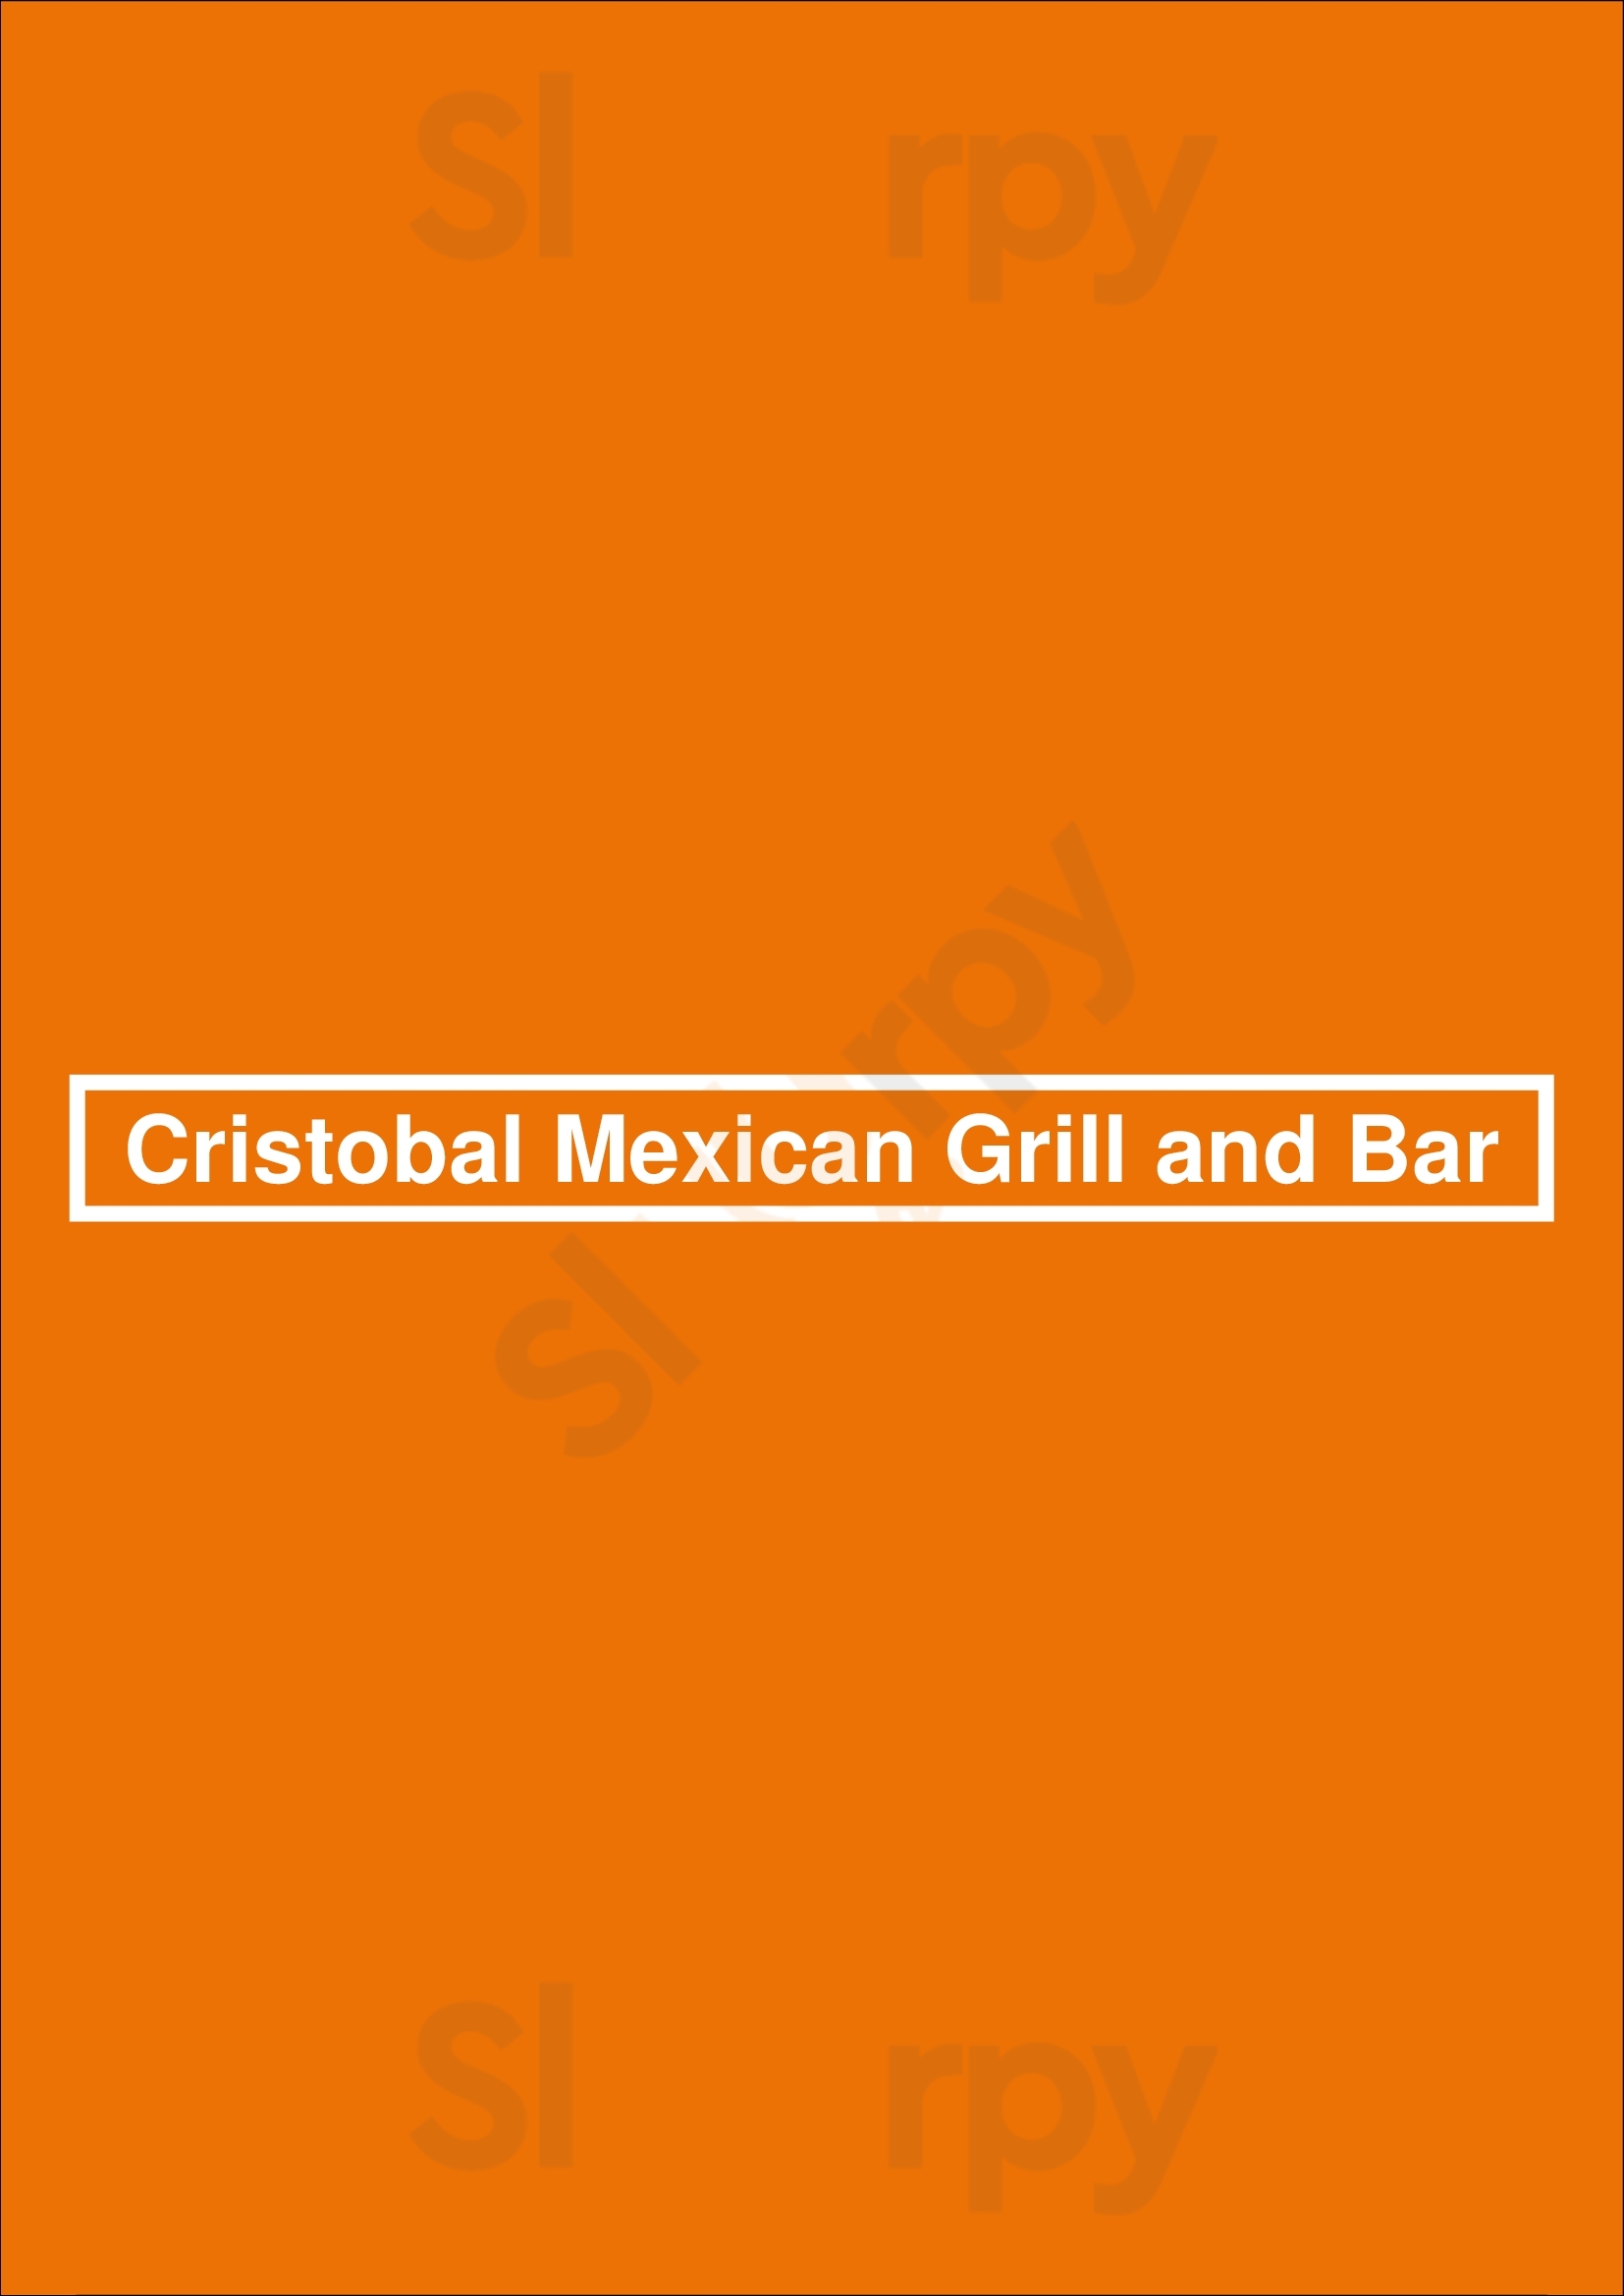 Cristobal Mexican Grill And Bar Richmond Menu - 1